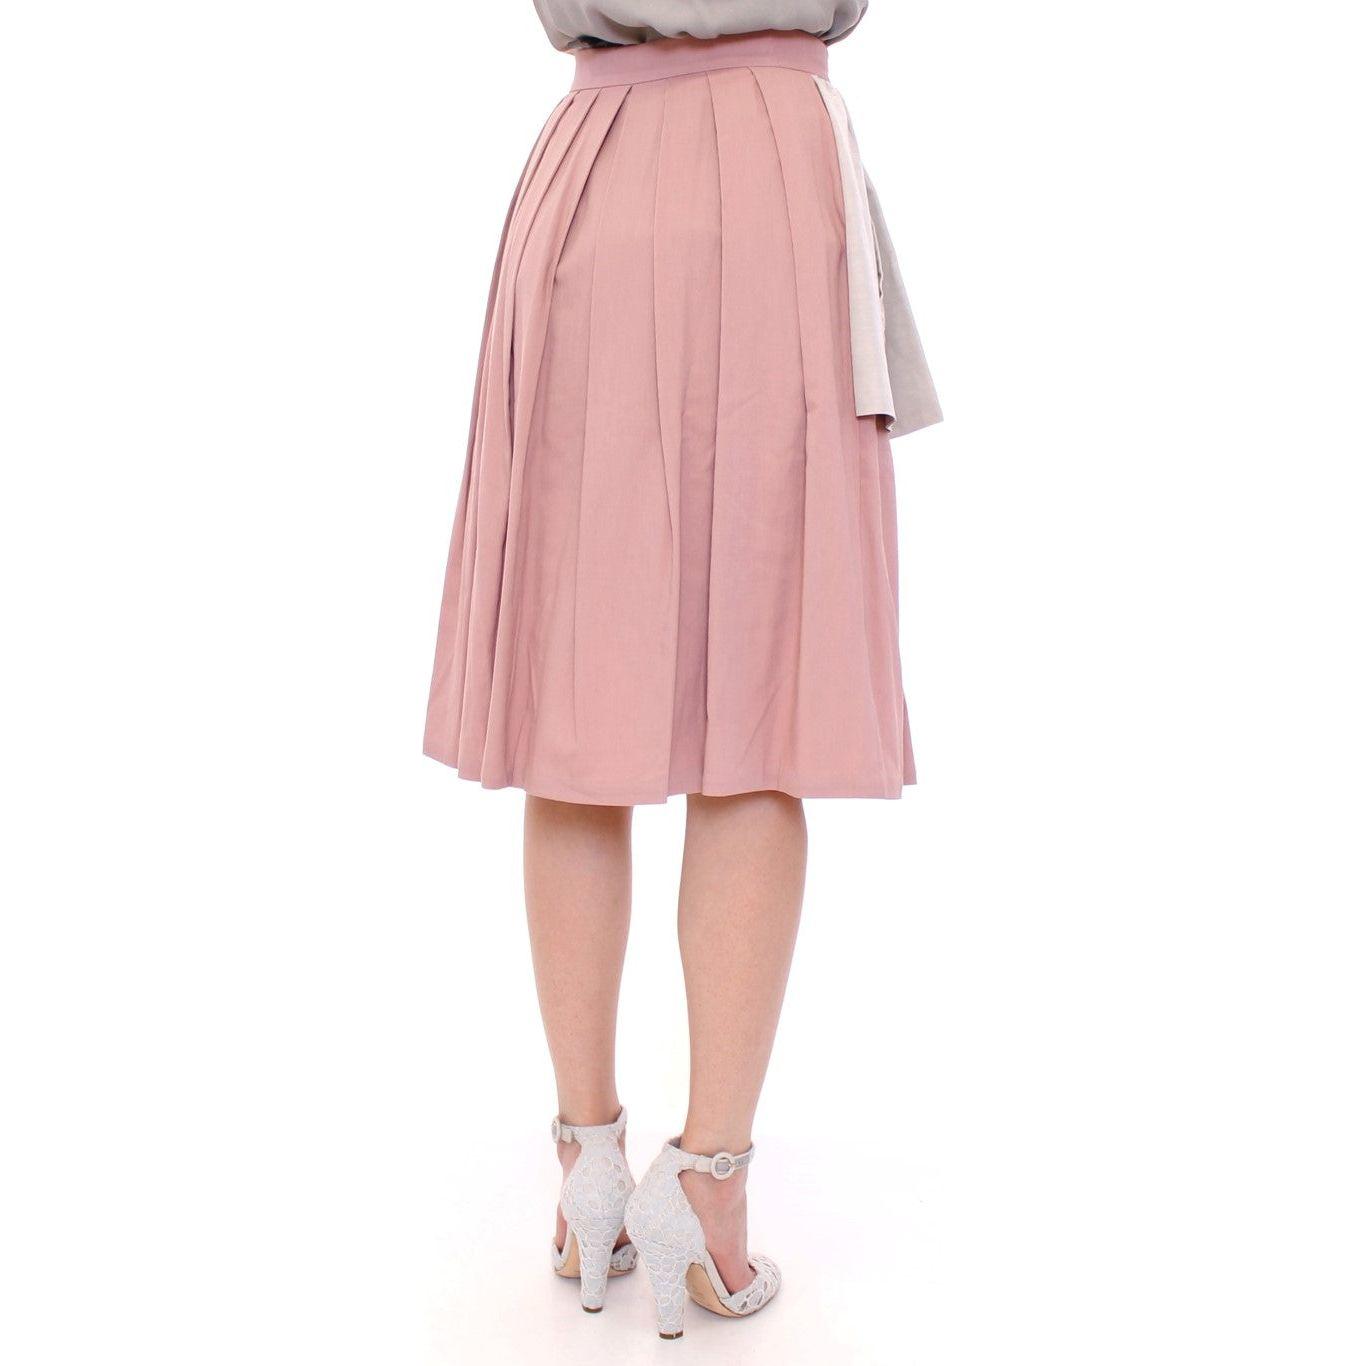 Comeforbreakfast Elegant Pleated Knee-length Skirt in Pink and Gray pink-gray-knee-length-pleated-skirt 219749-pink-gray-knee-length-pleated-skirt-3.jpg